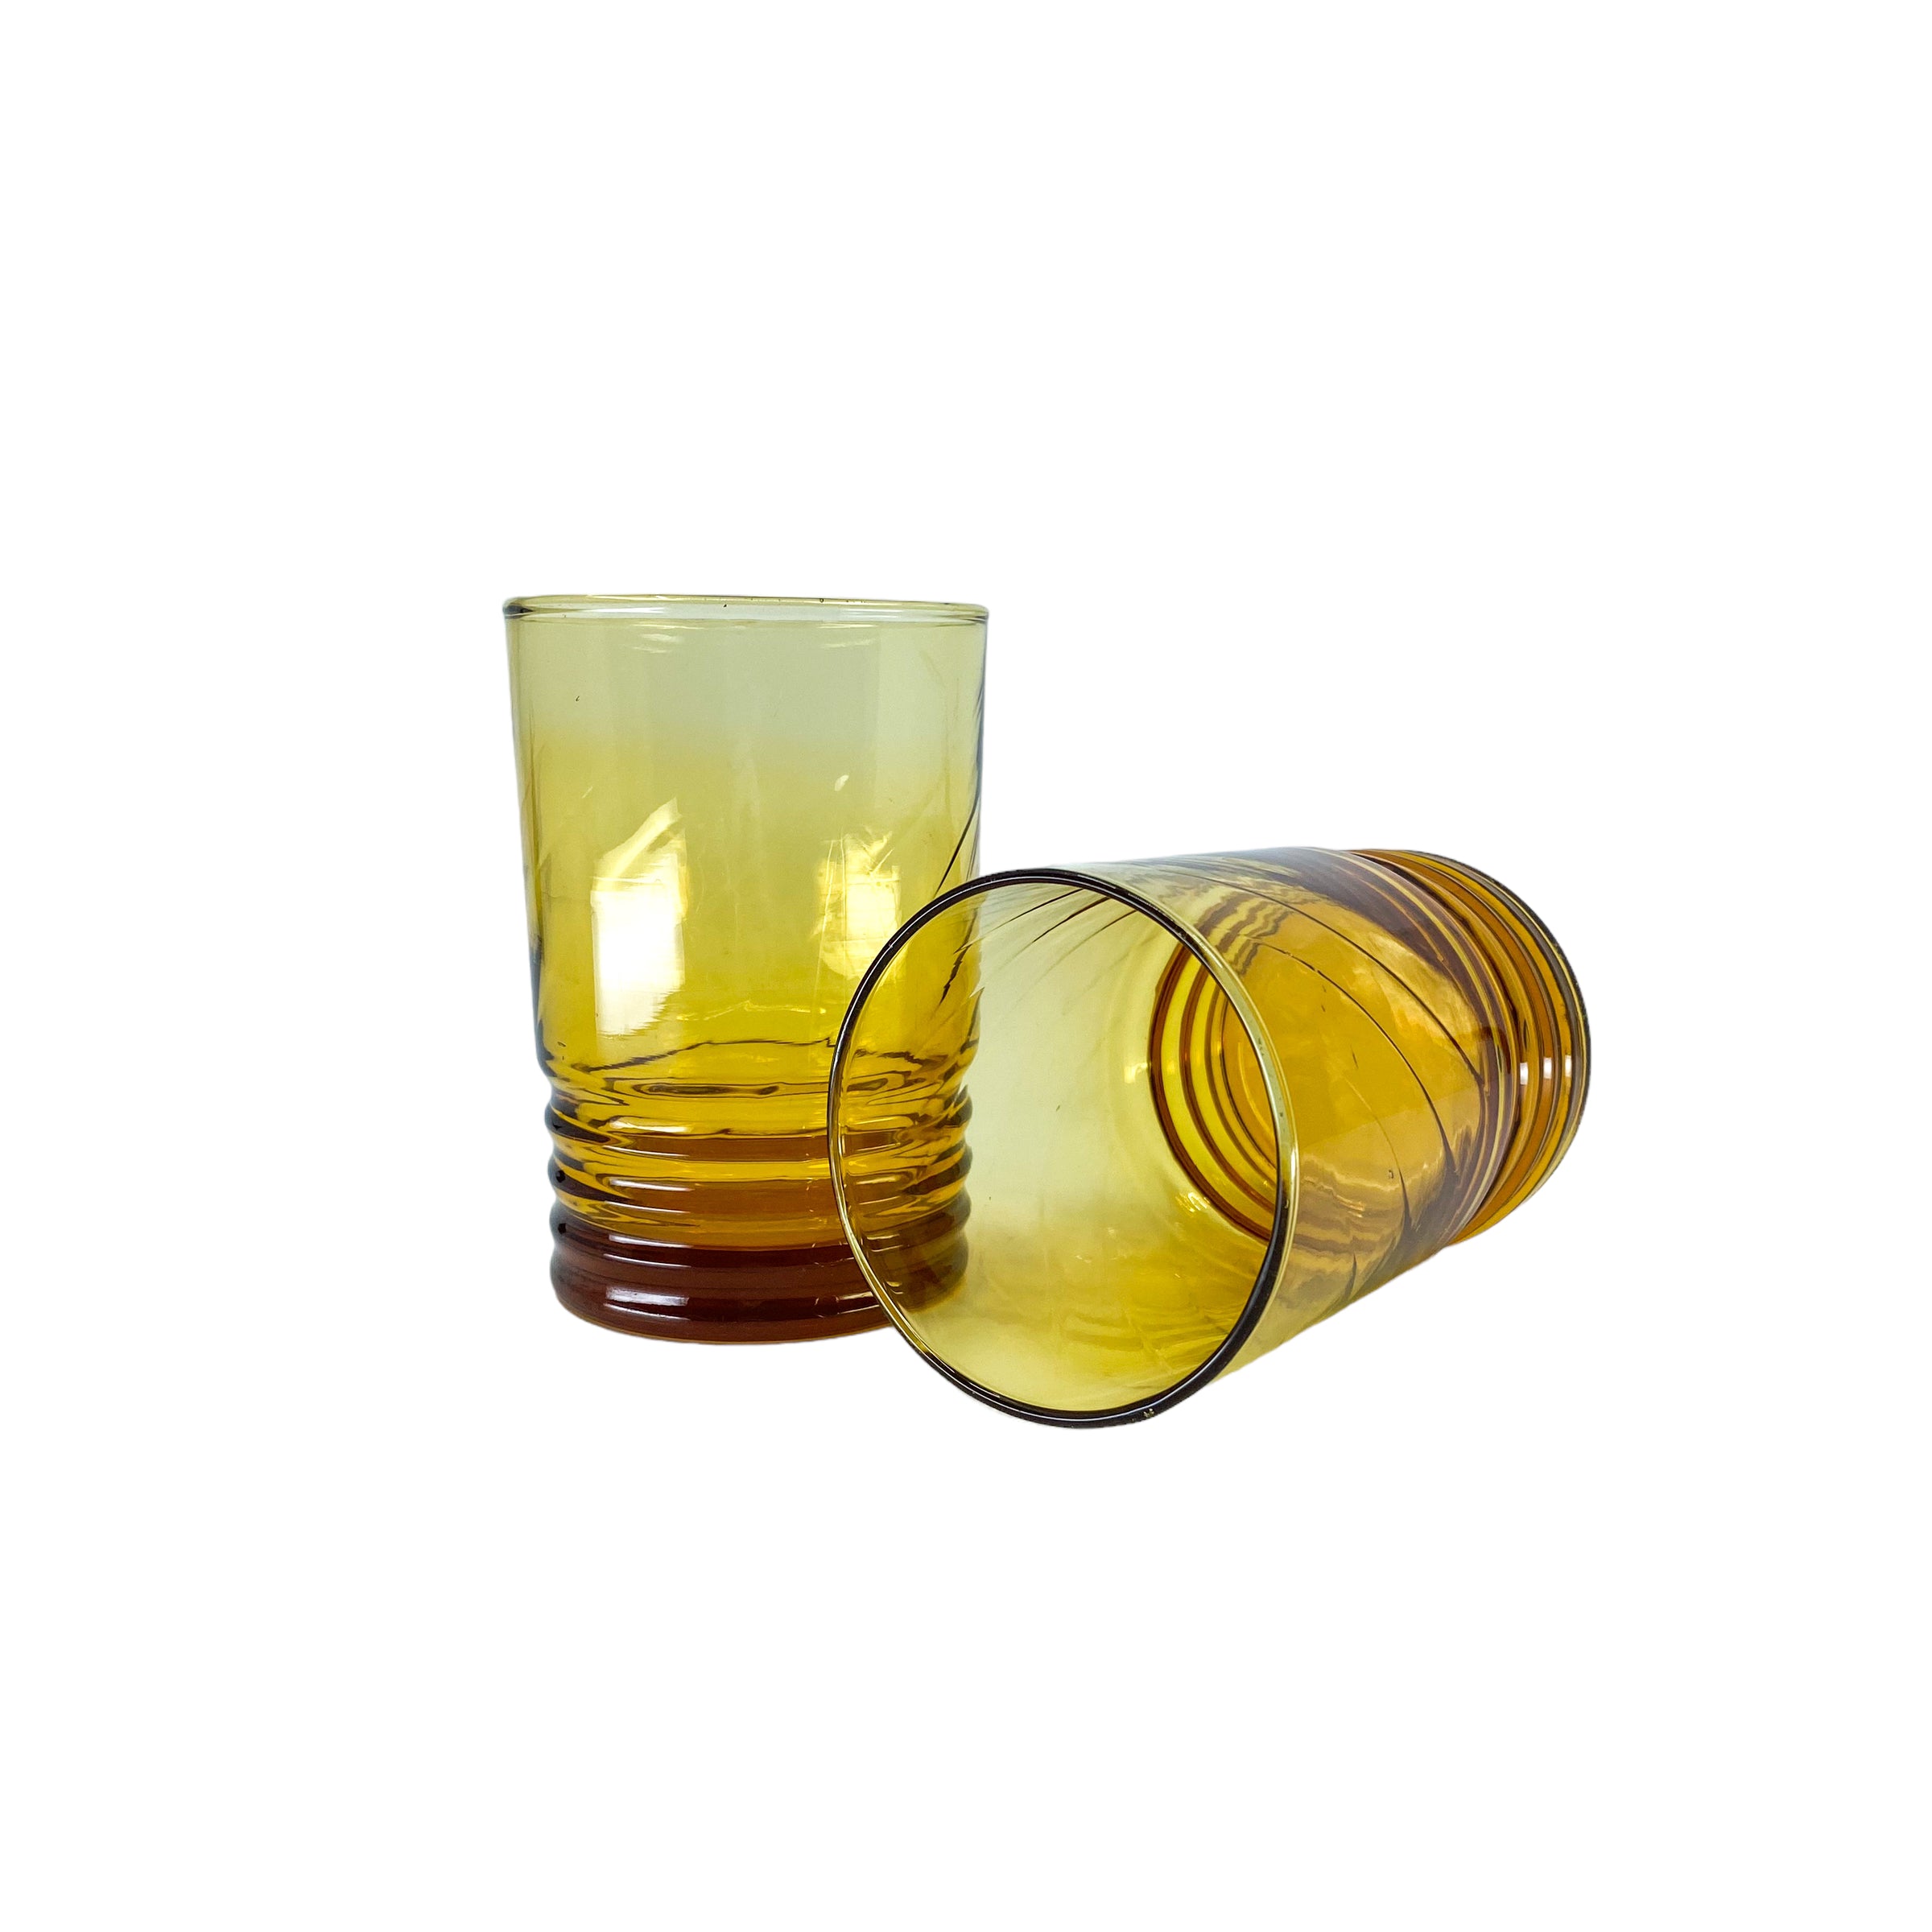 Libbey Amber Glass Swirl Tumblers, Pair